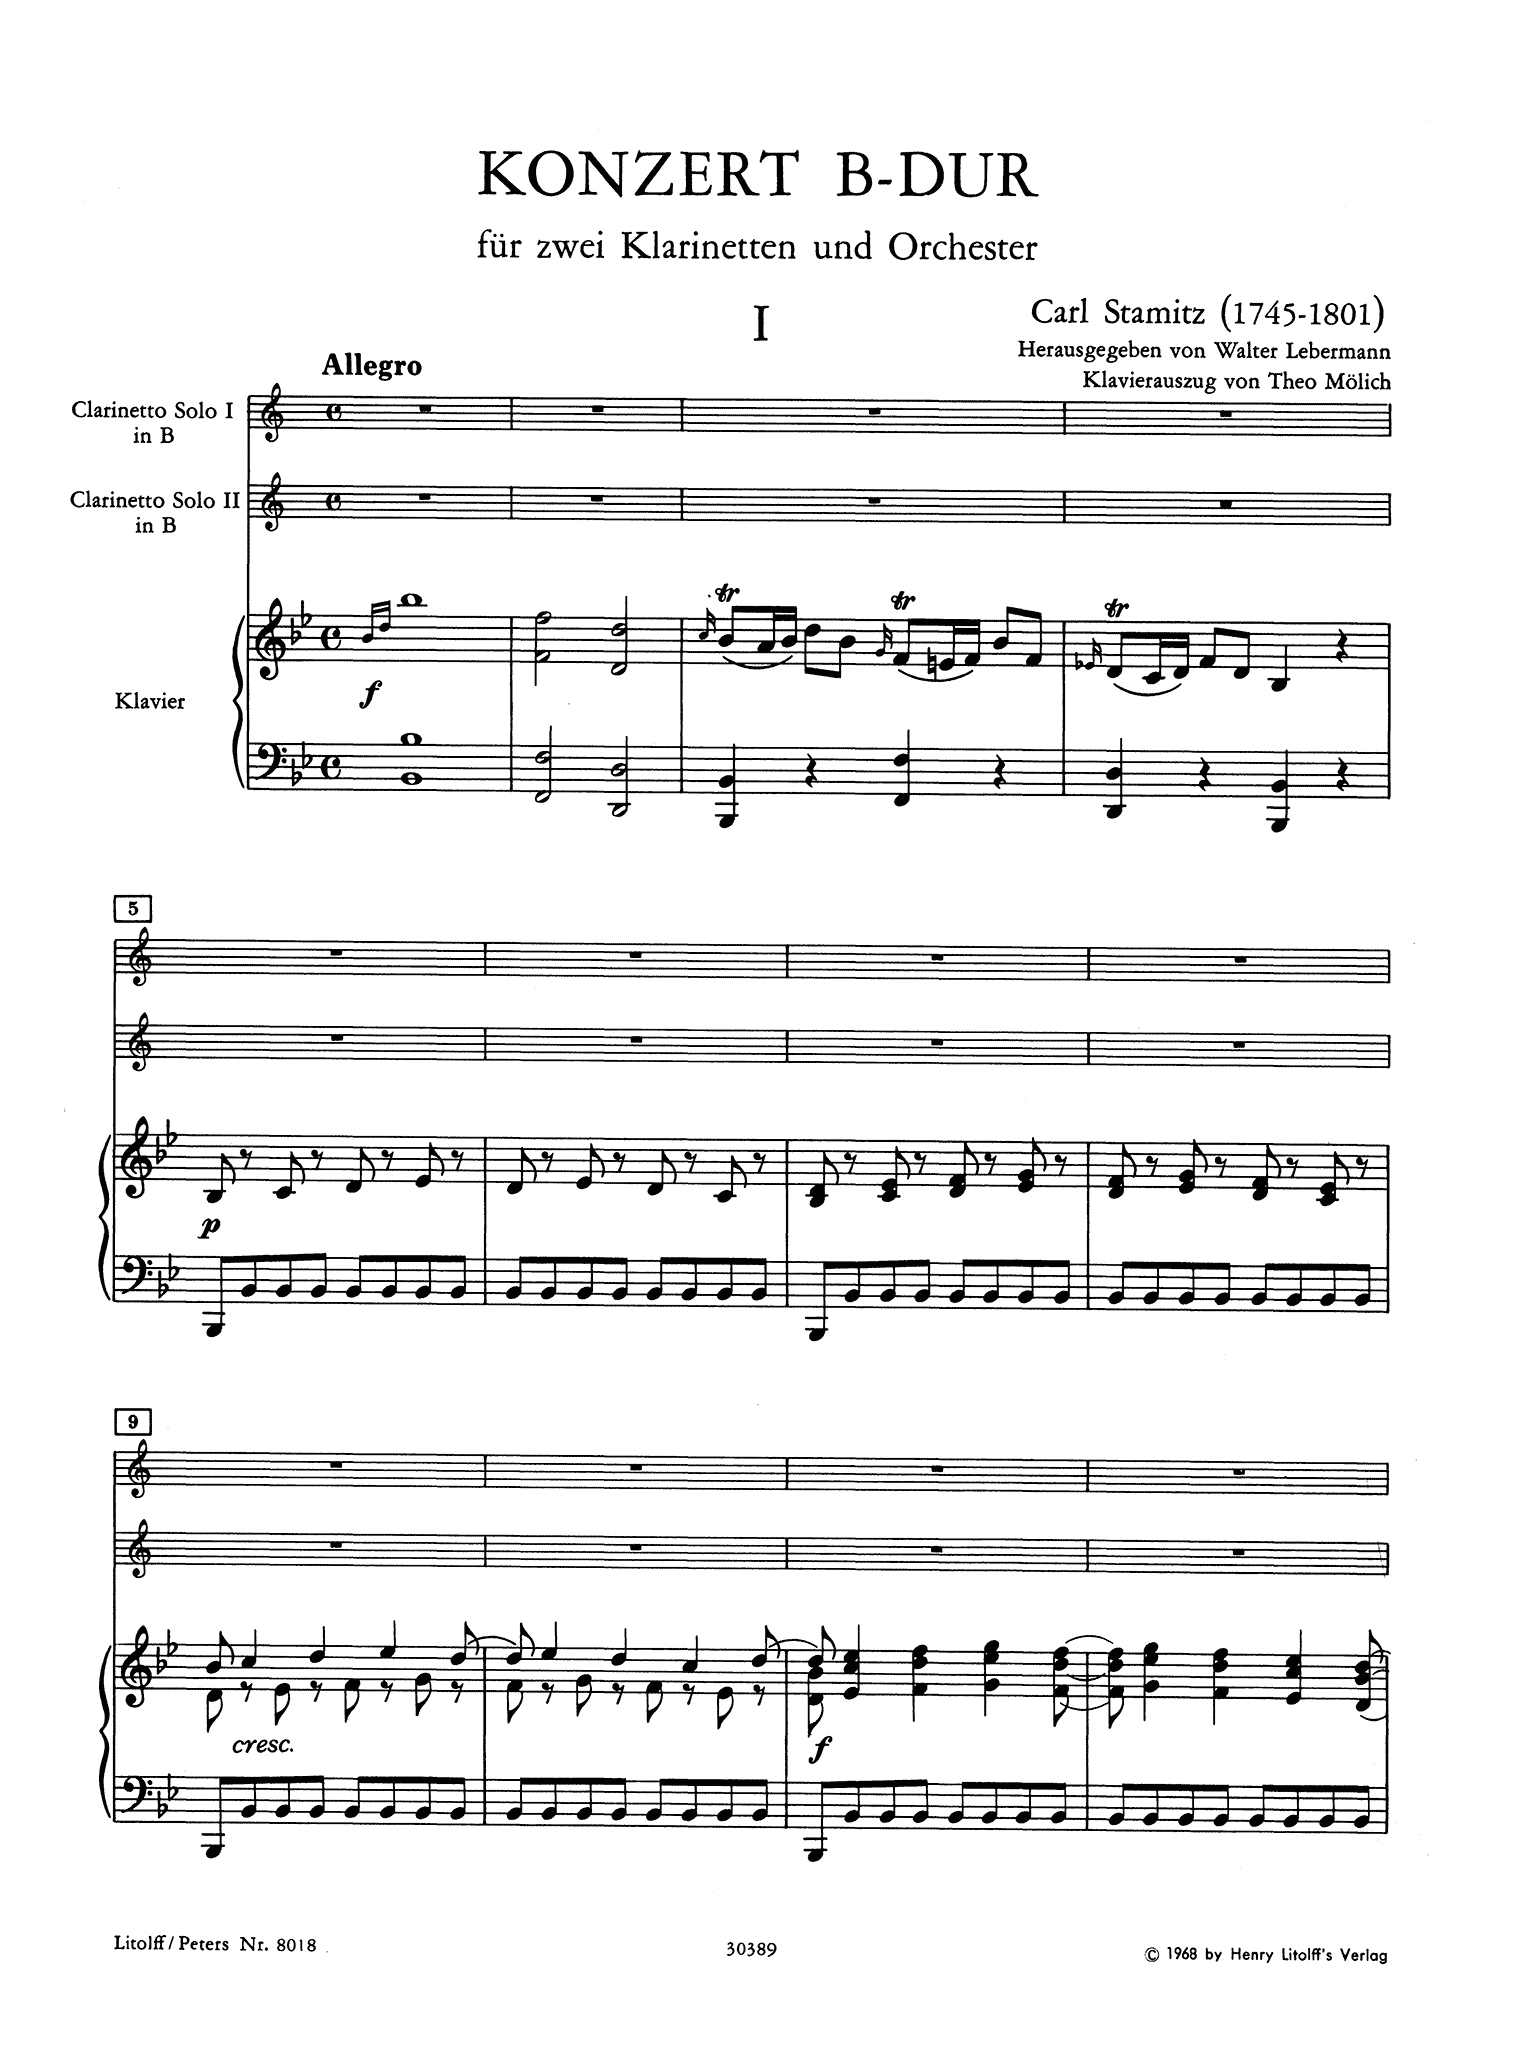 Carl Stamitz Concerto for 2 Clarinets B-flat Major Sieber No. 4 - Movement 1